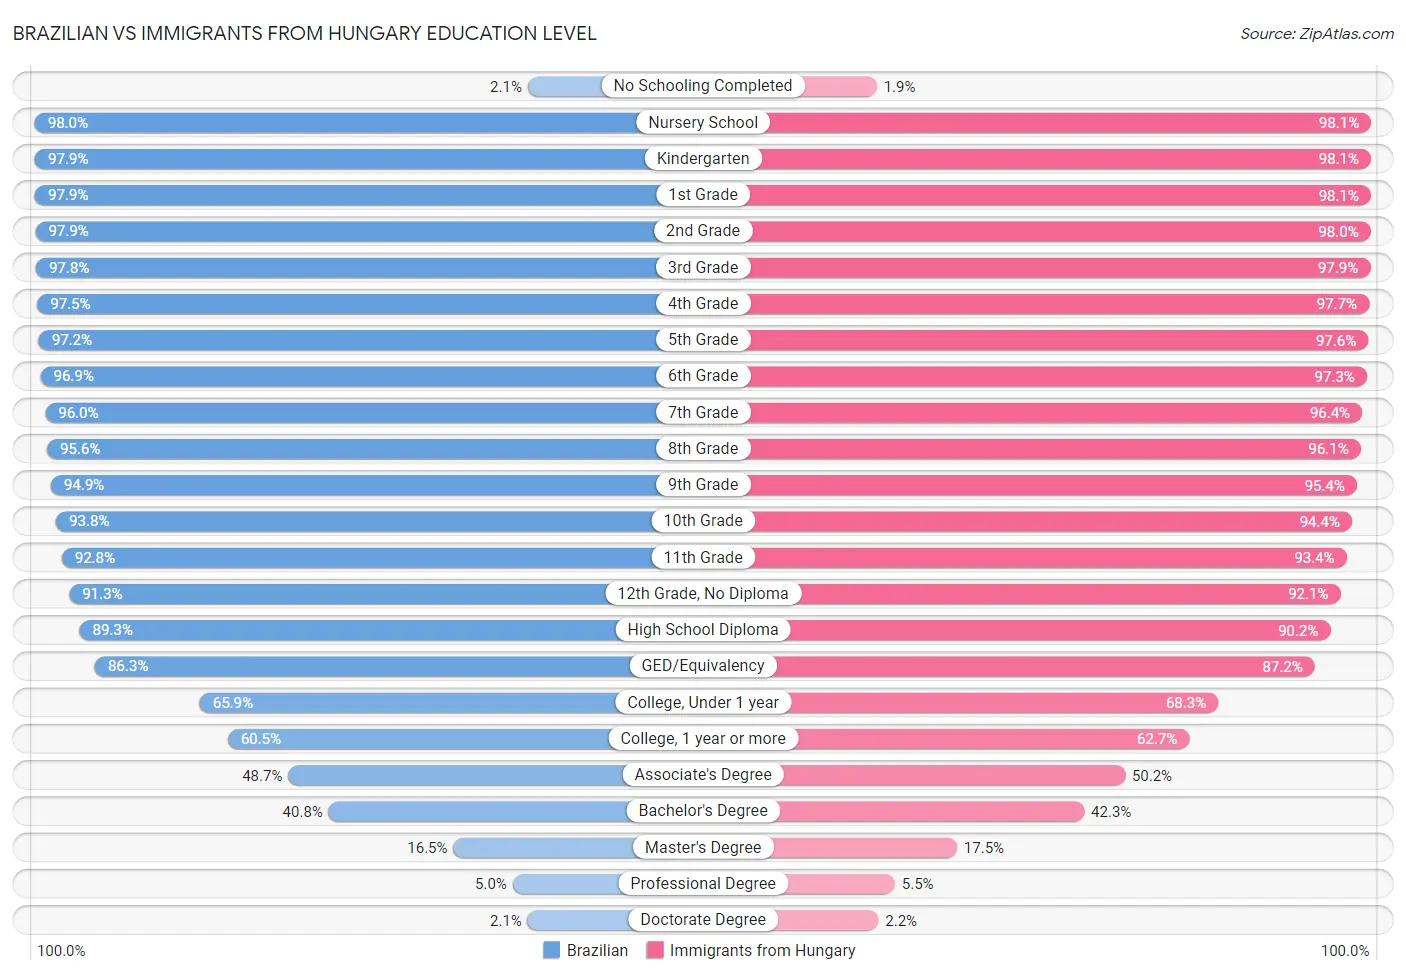 Brazilian vs Immigrants from Hungary Education Level